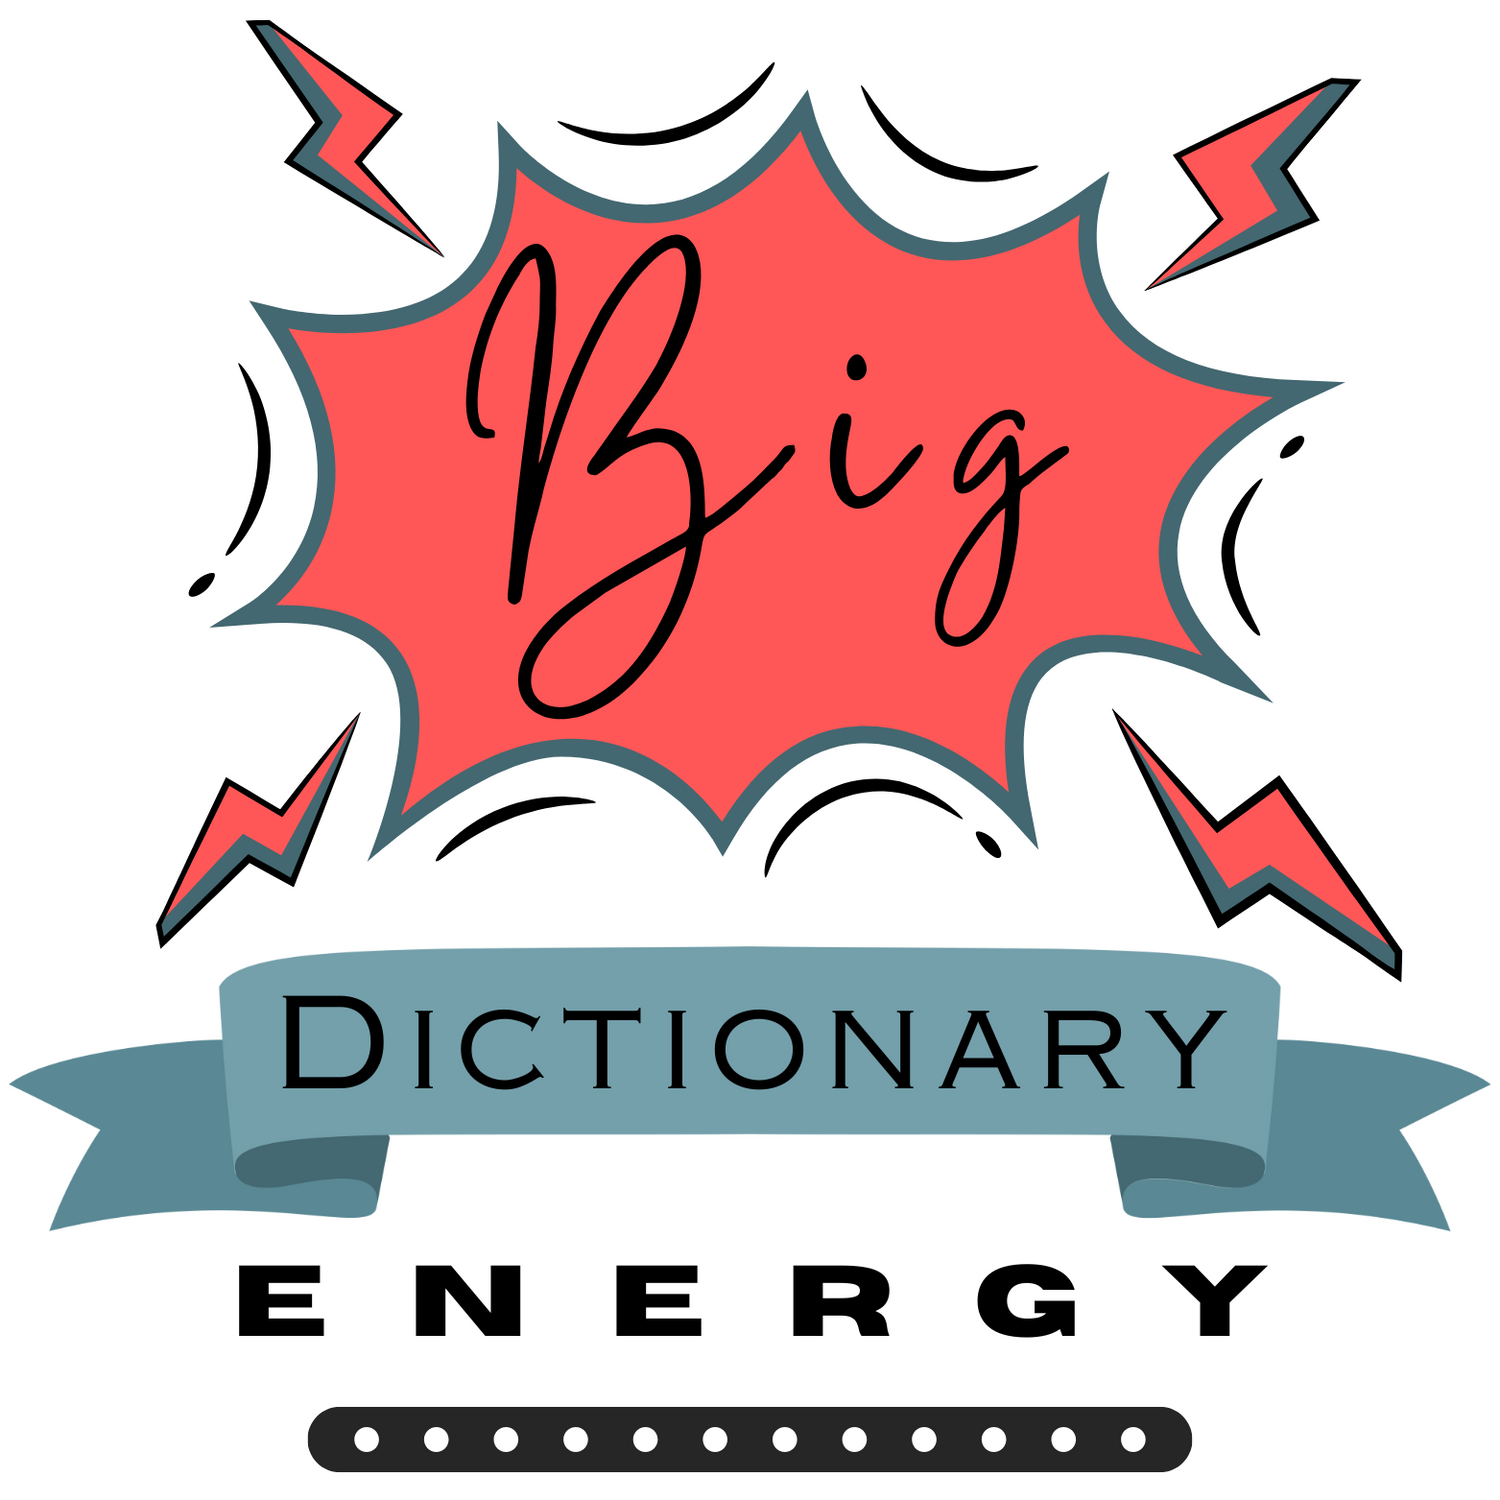 Big Dictionary Energy